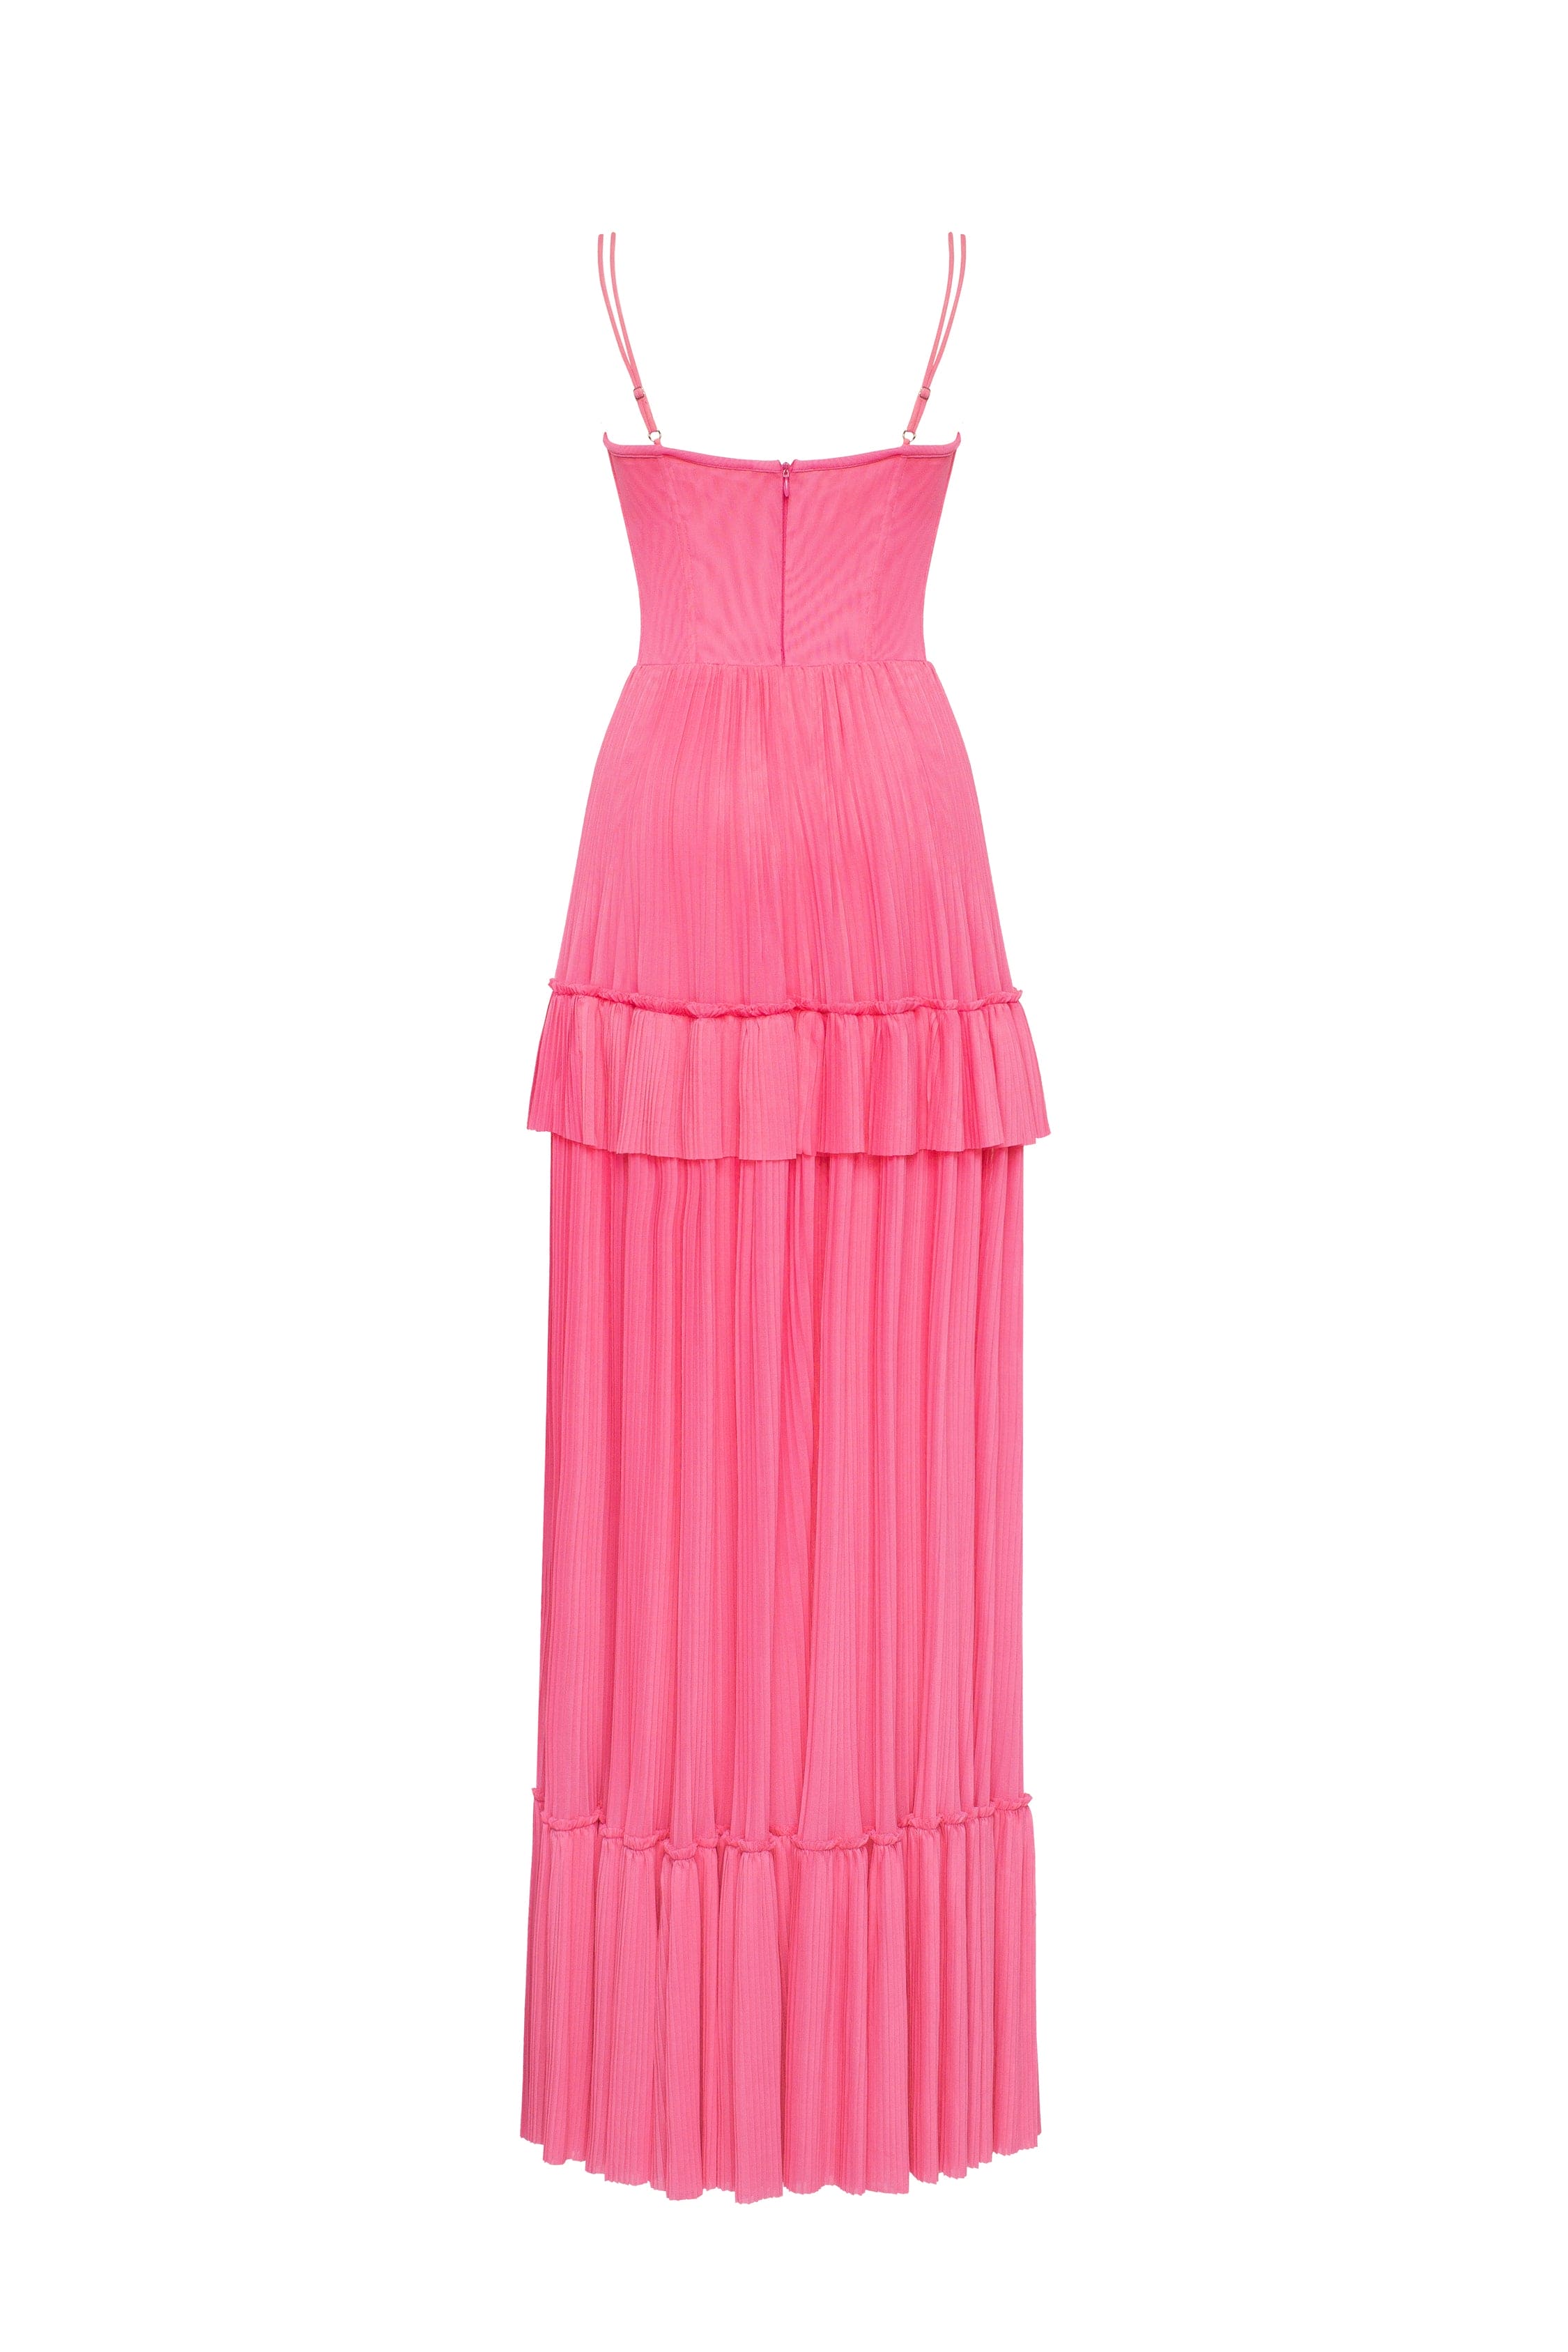 Barbie pink spaghetti strap pleated maxi dress, Garden of Eden